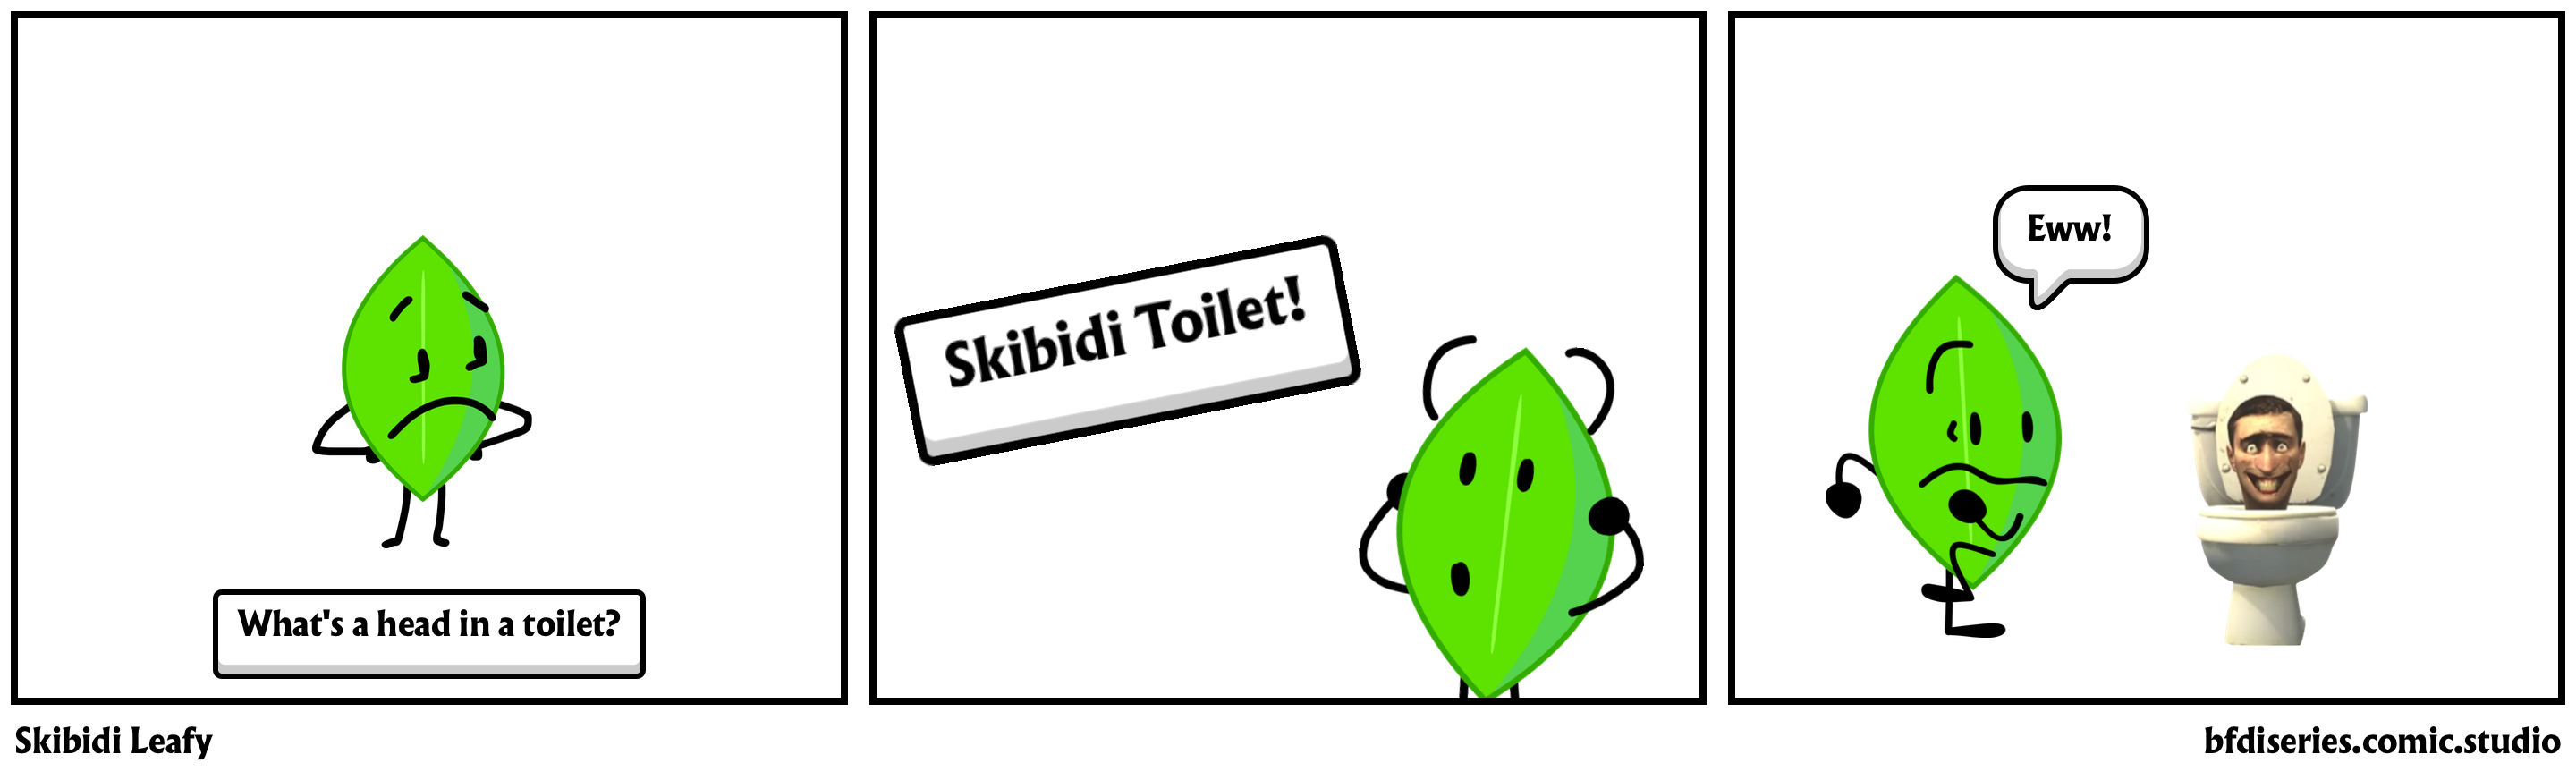 Skibidi Leafy